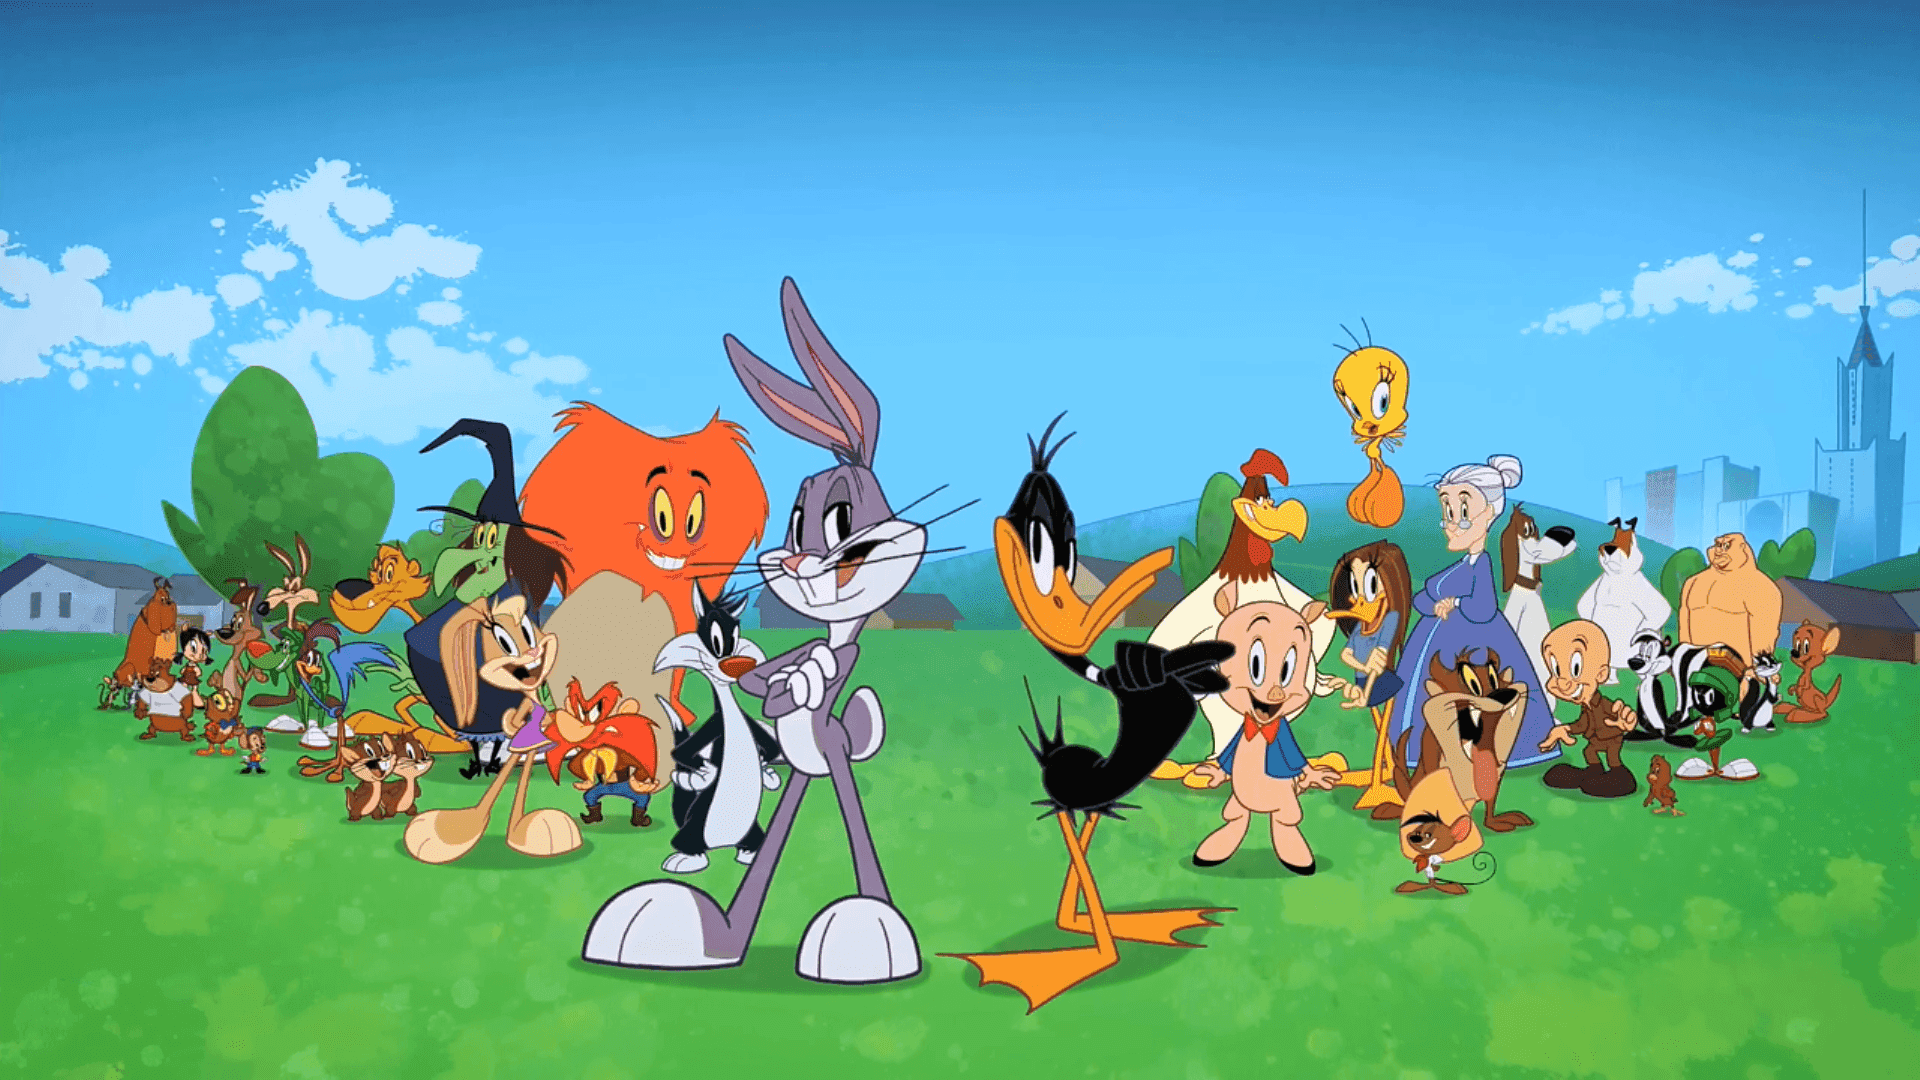 The wacky world of Looney Tunes